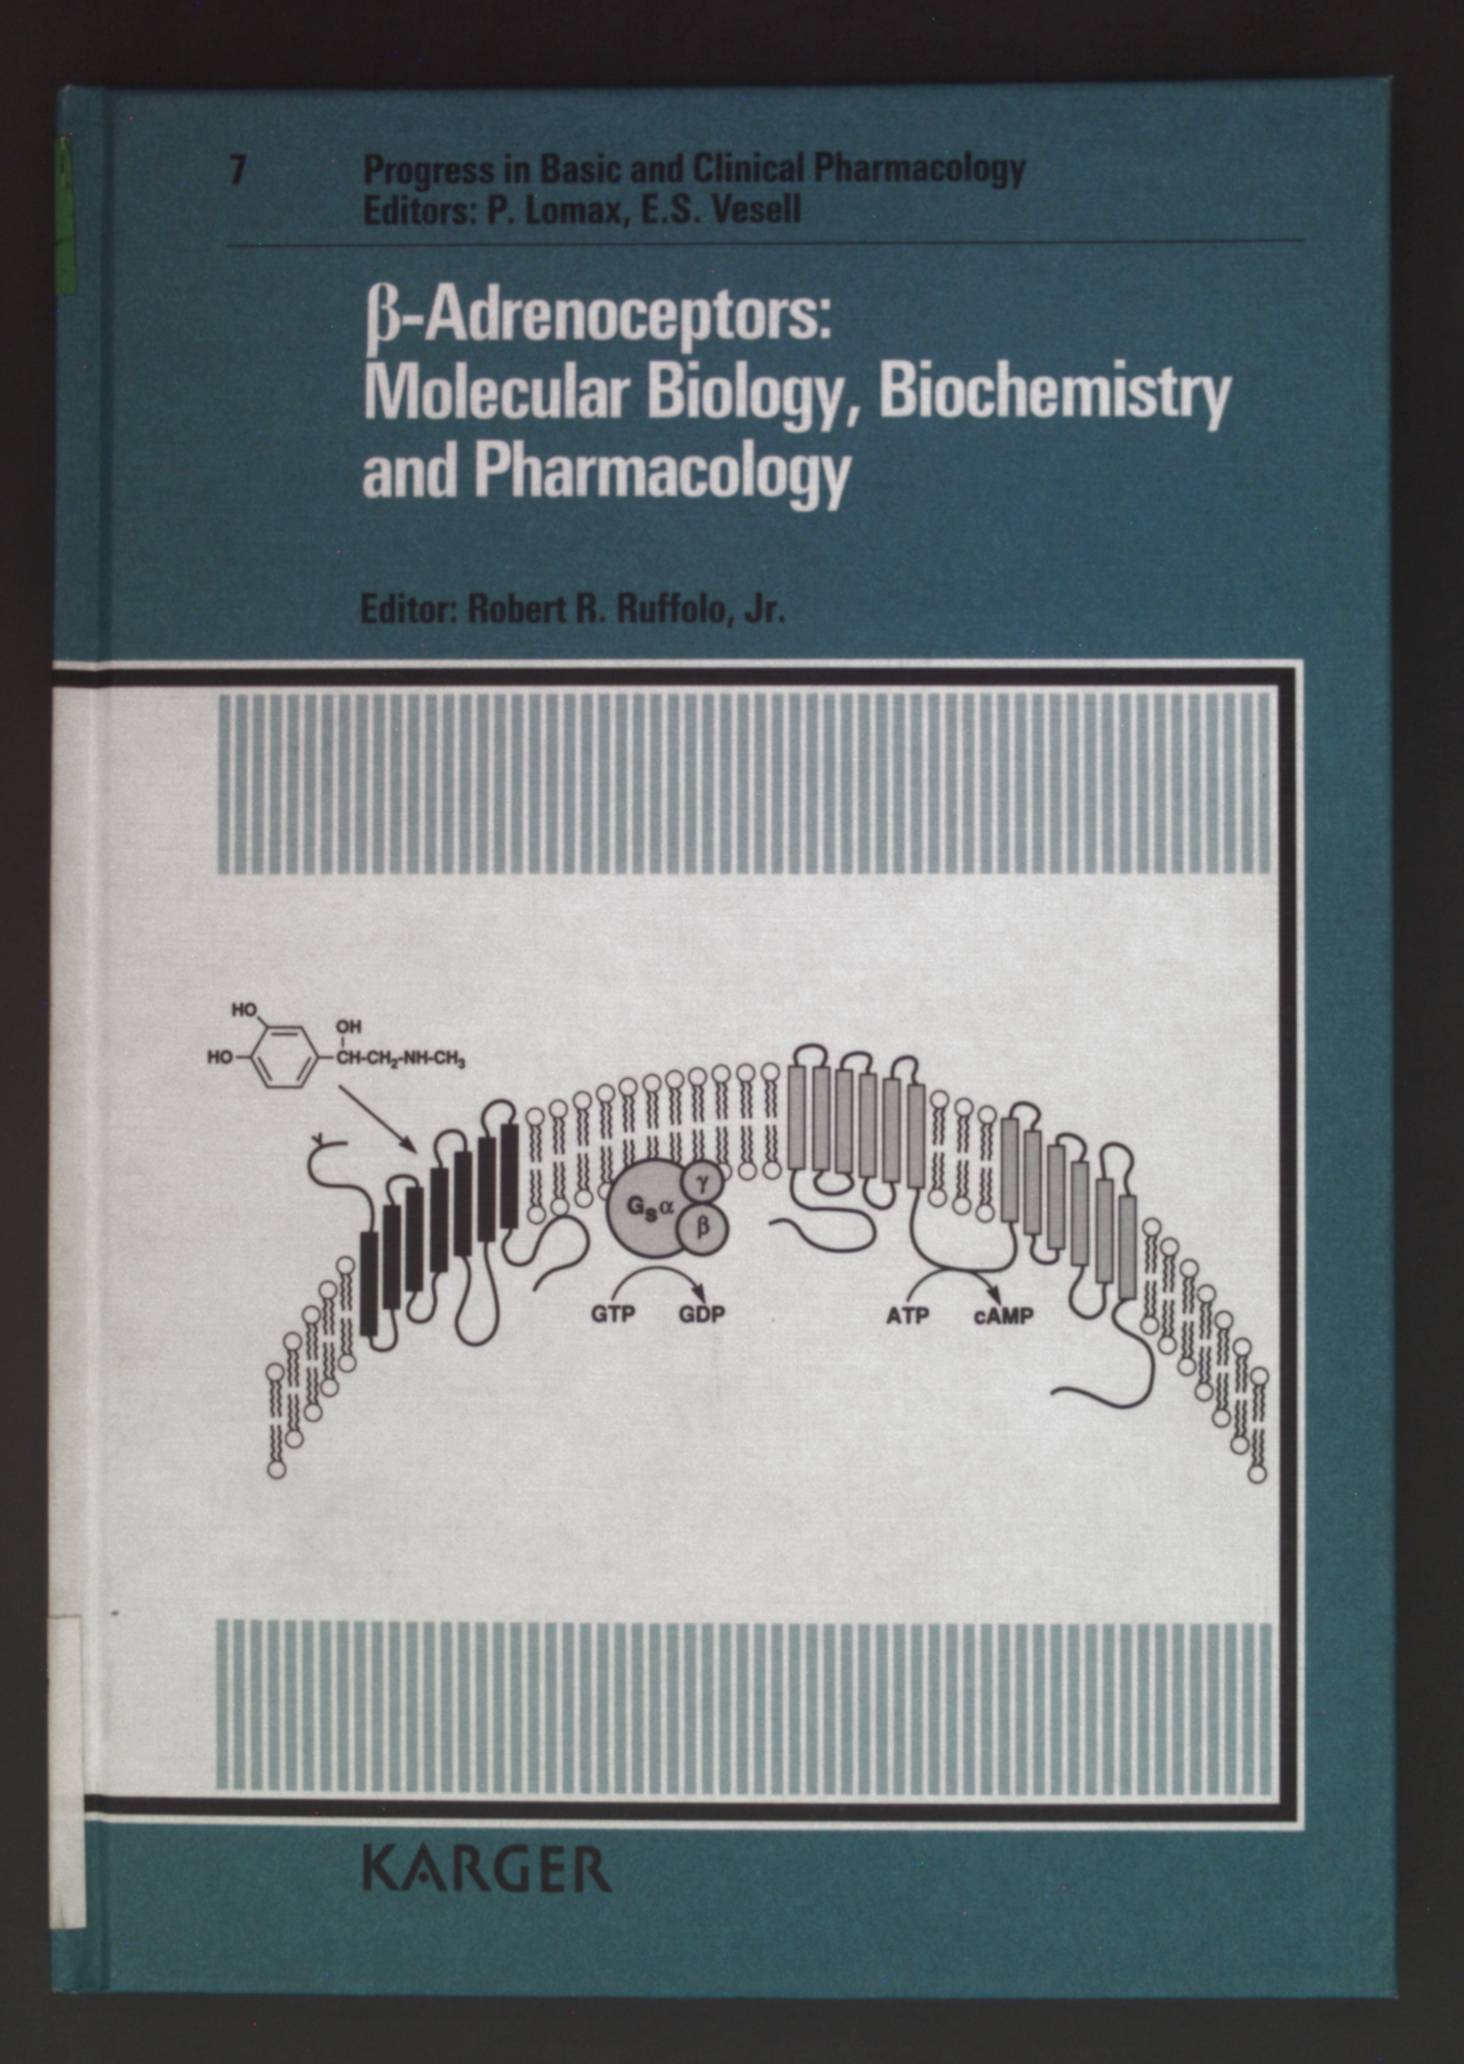 ß-Adrenoceptors: Molecular Biology, Biochemistry and Pharmacology. Progress in Basic and Clinical Pharmacology: Band 7. - Ruffolo, Robert R jr